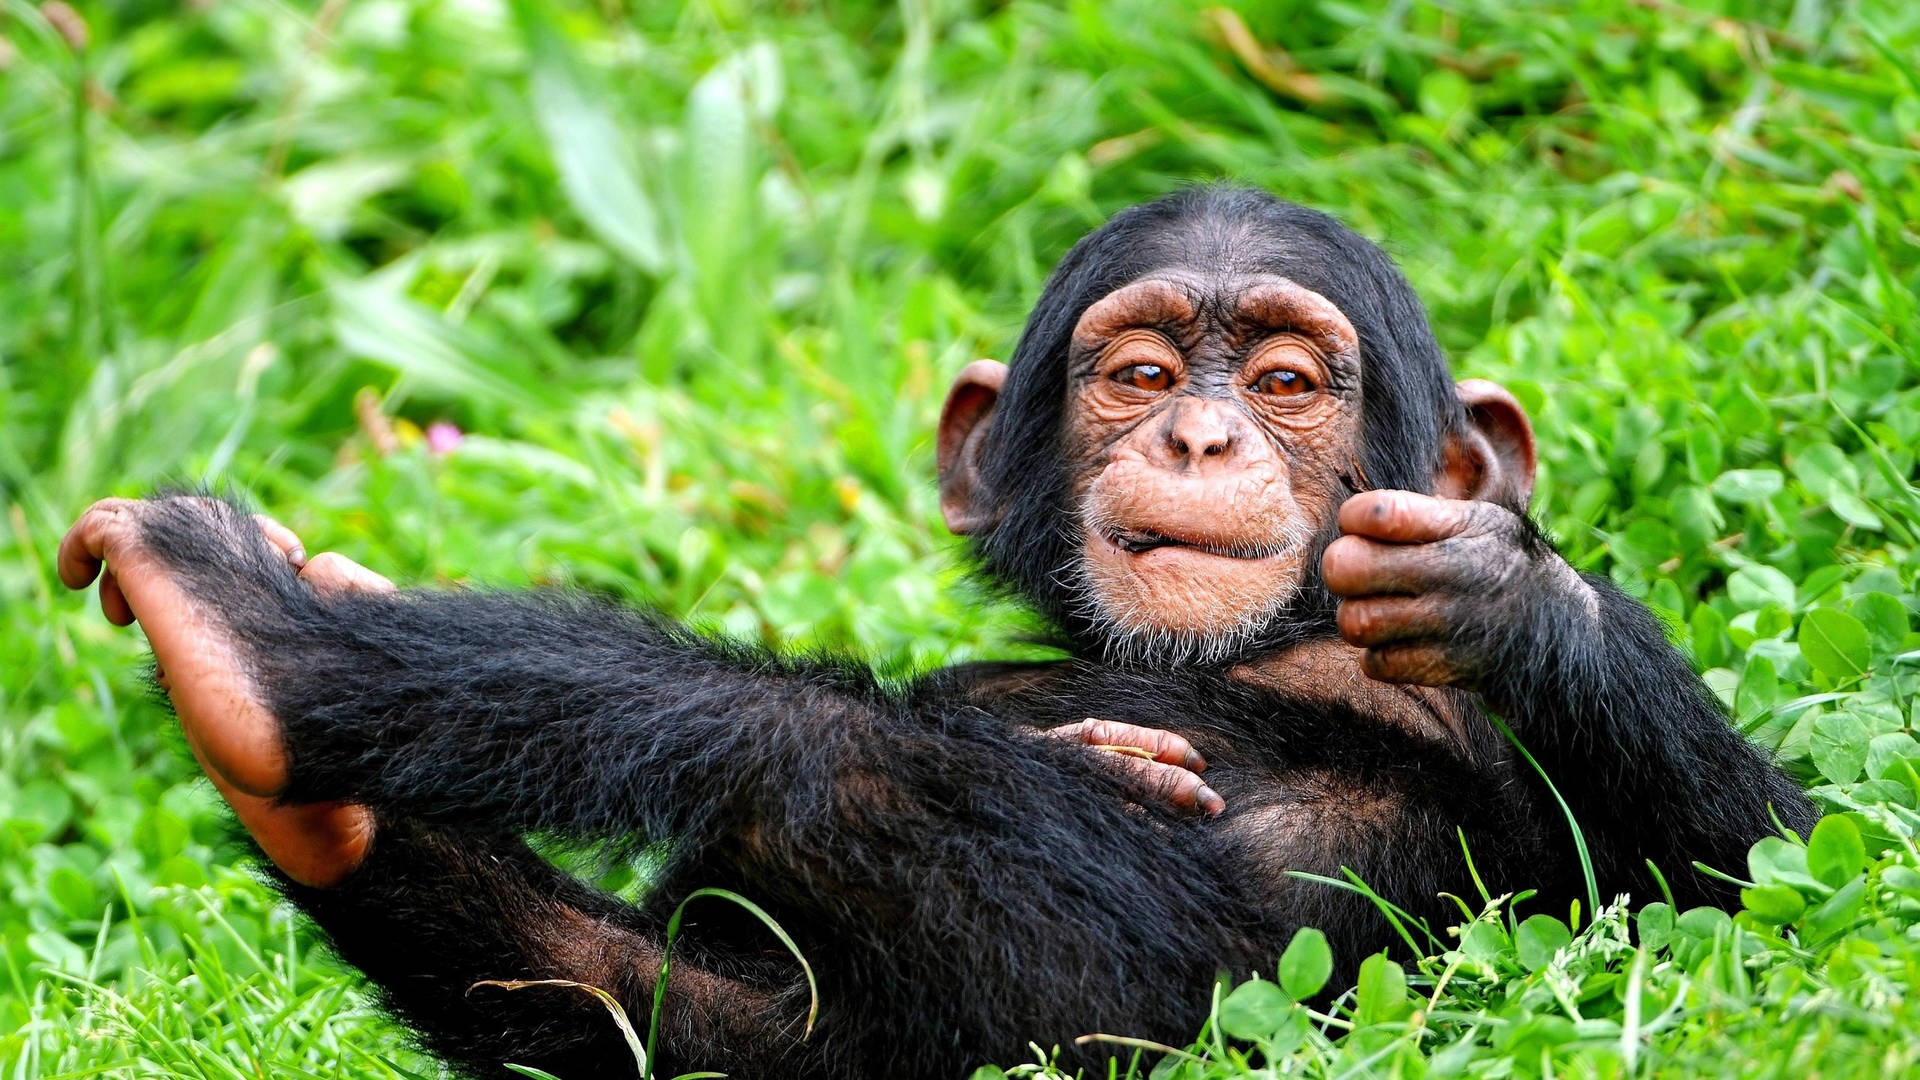 Baby Chimpanzee At Grassy Ground Wallpaper